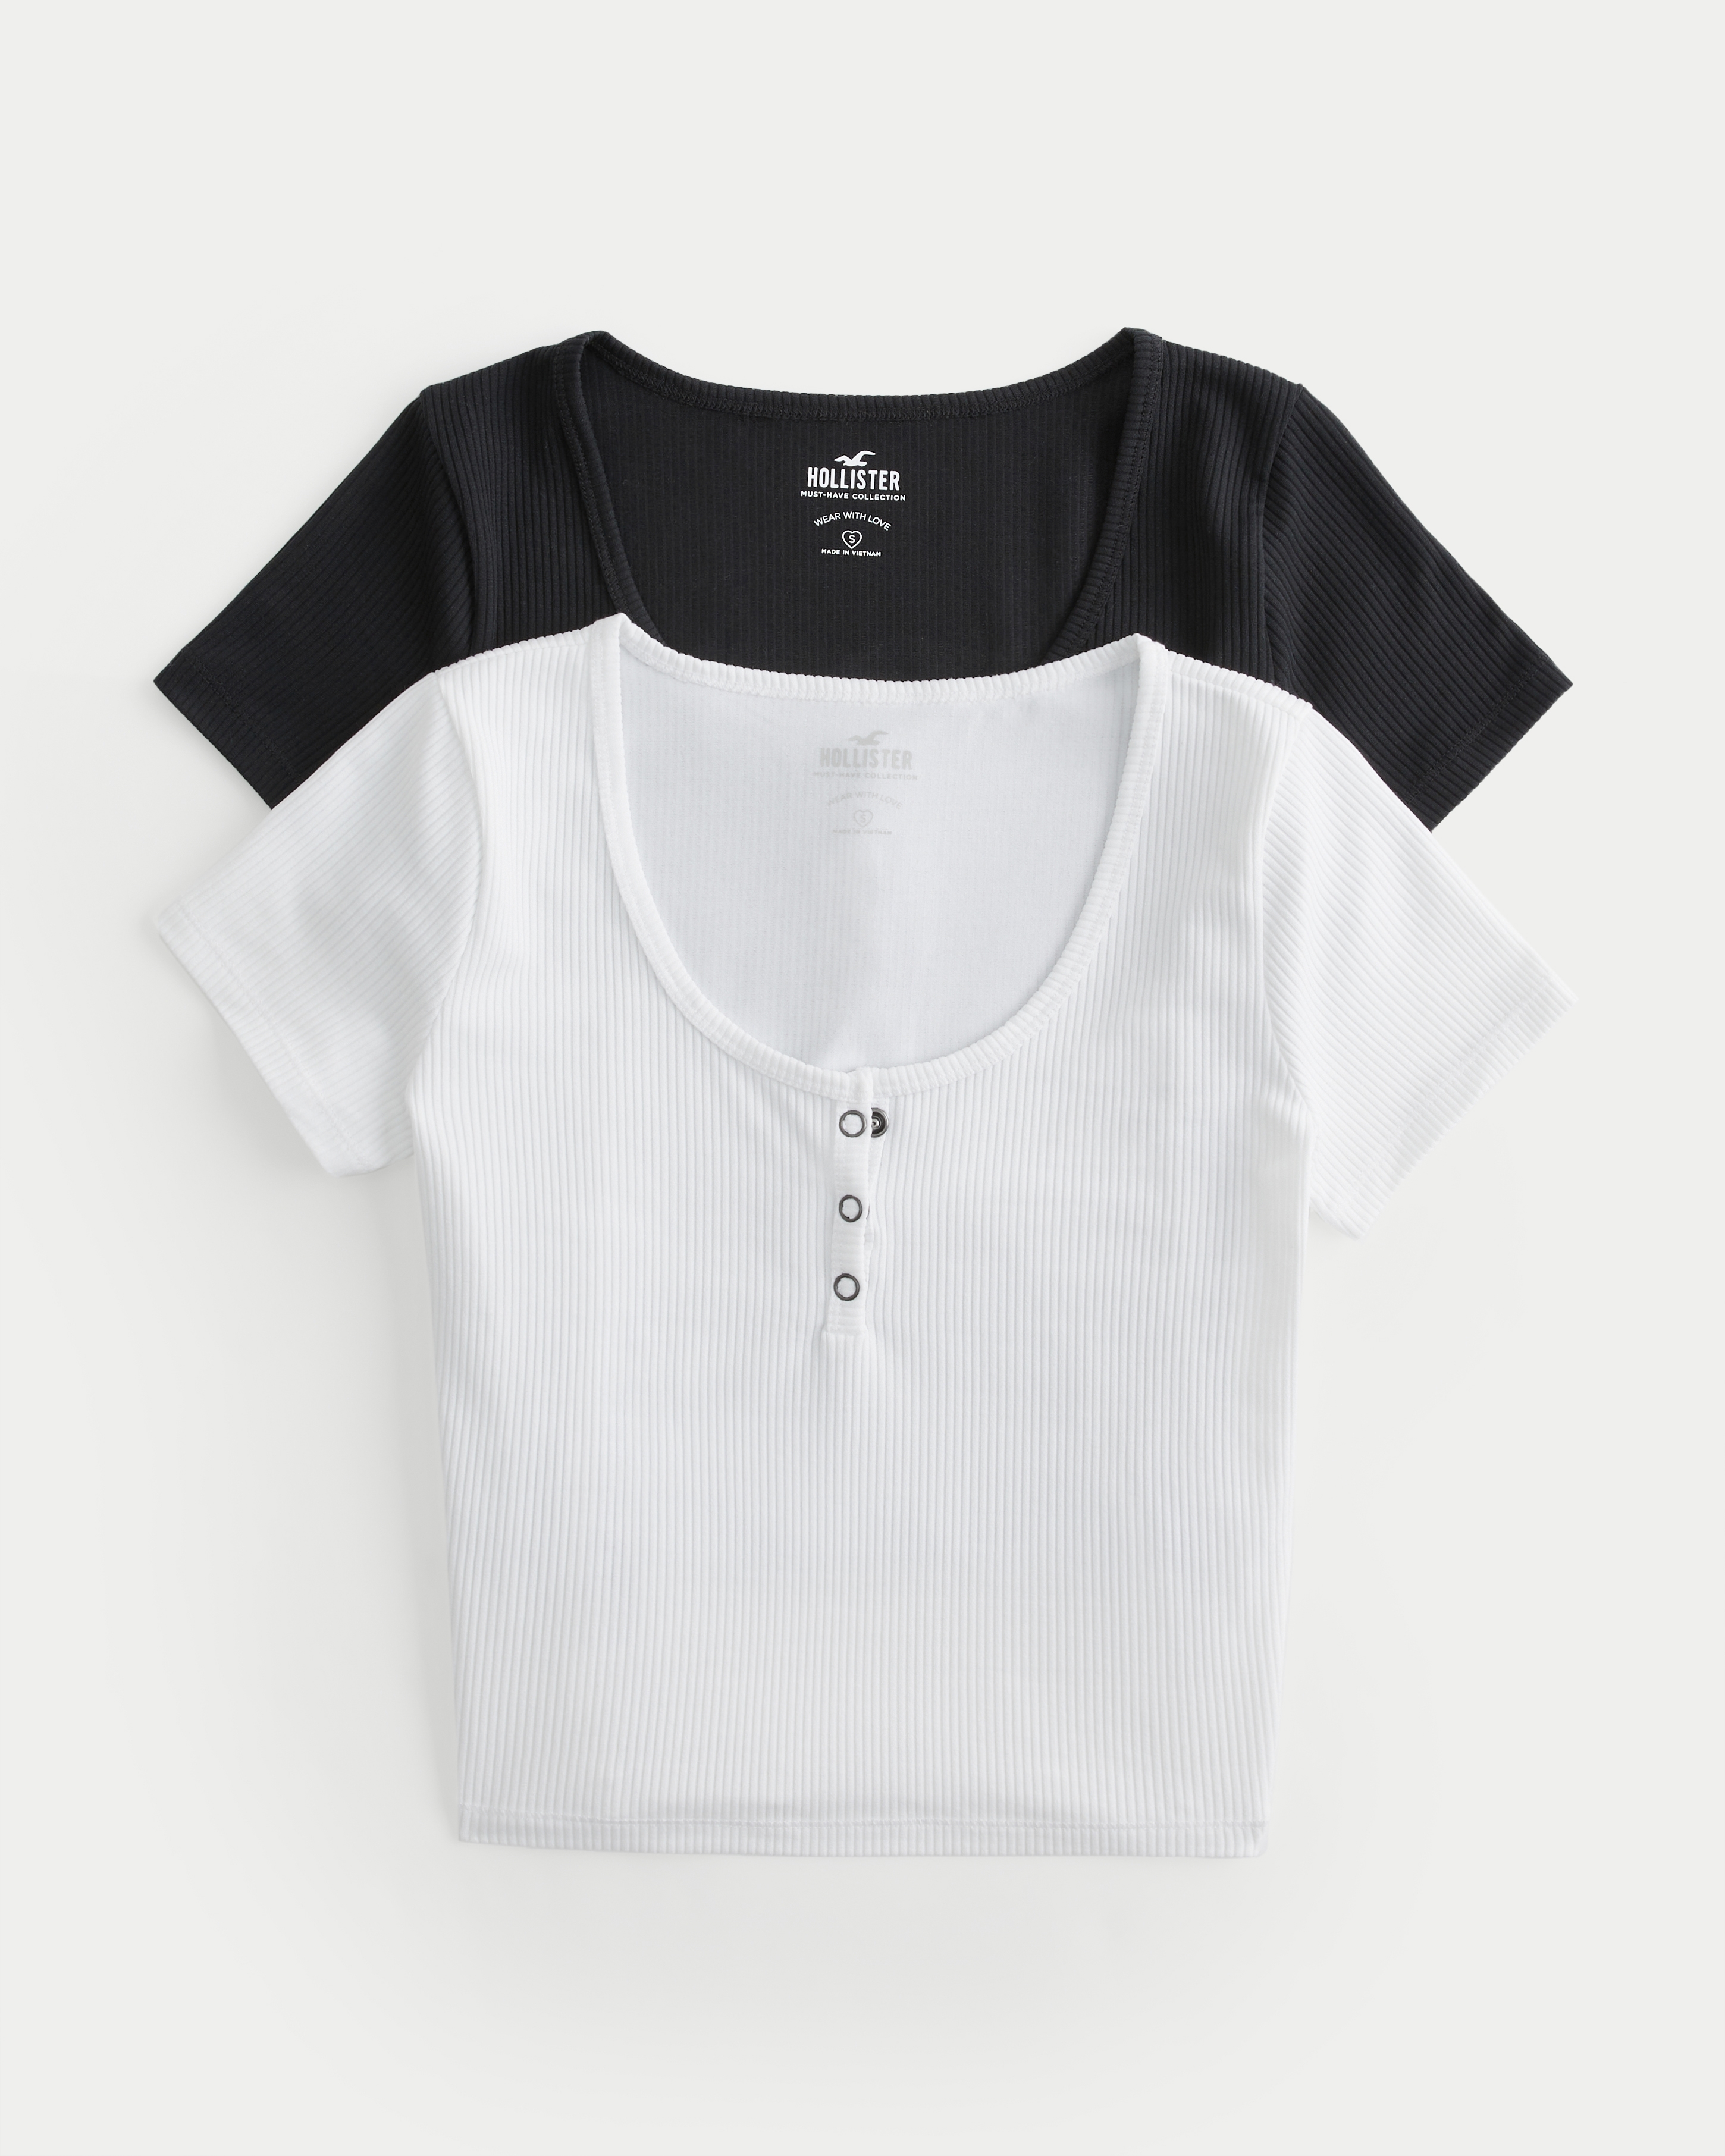 Hollister short sleeve logo crop top in white